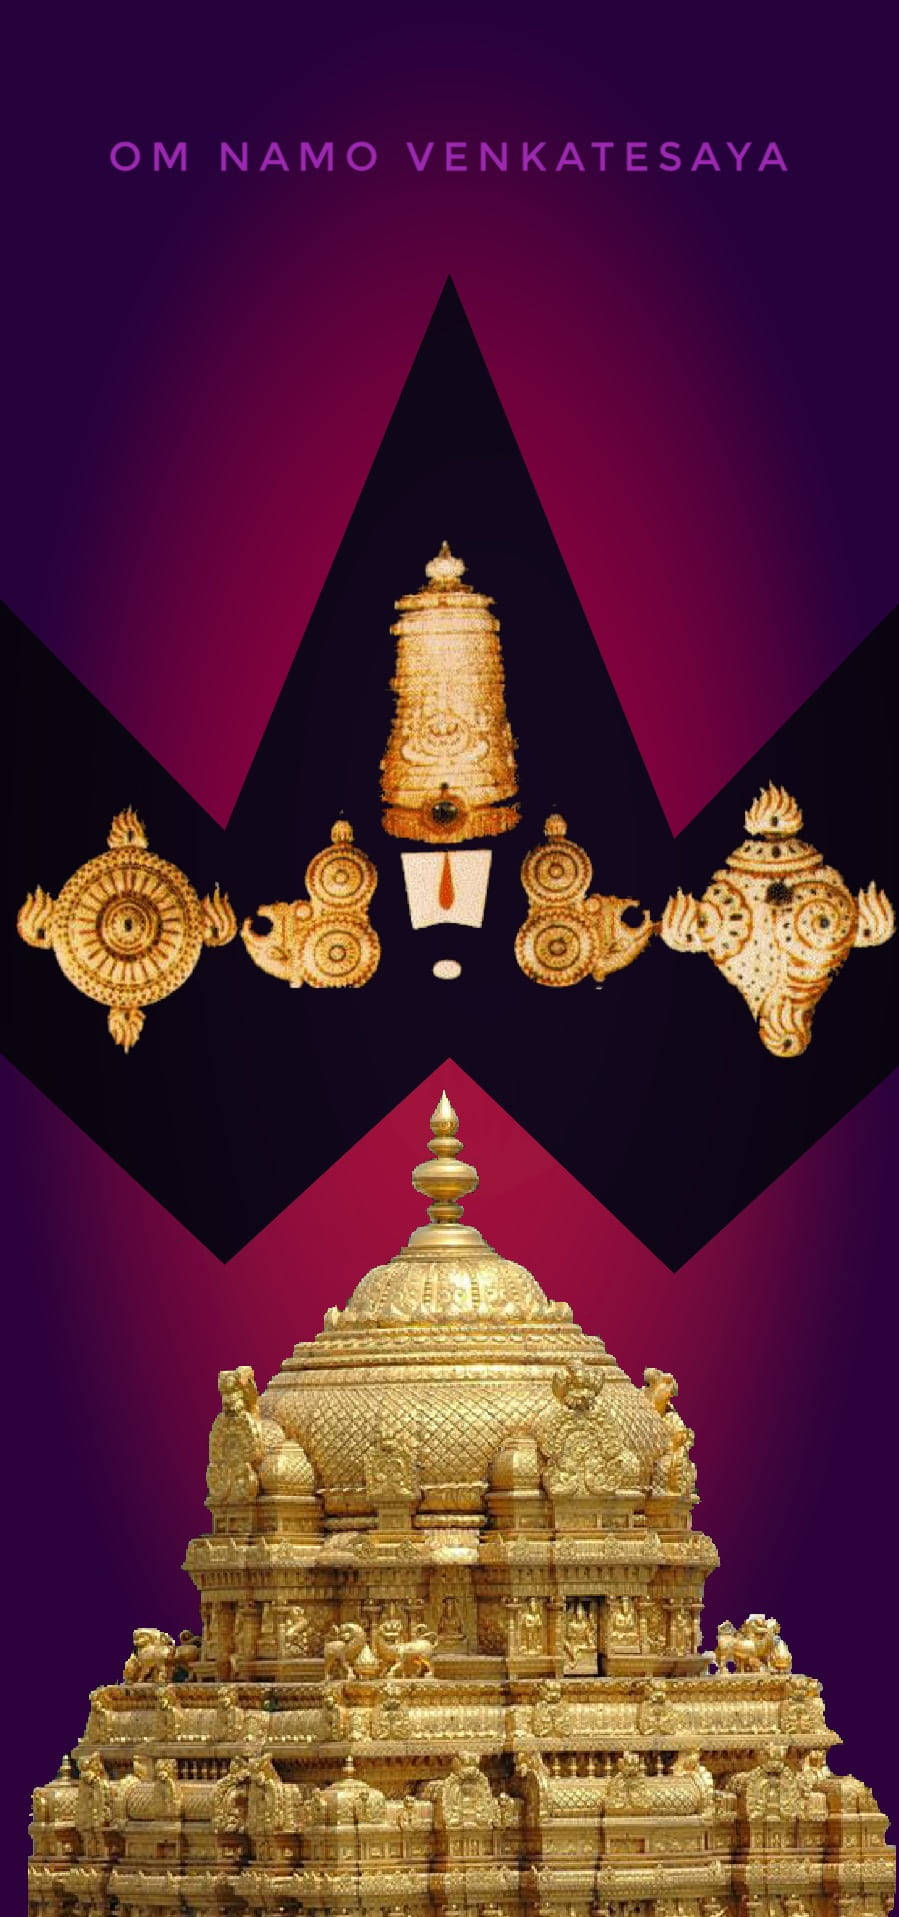 Tirupati Balaji Pagoda